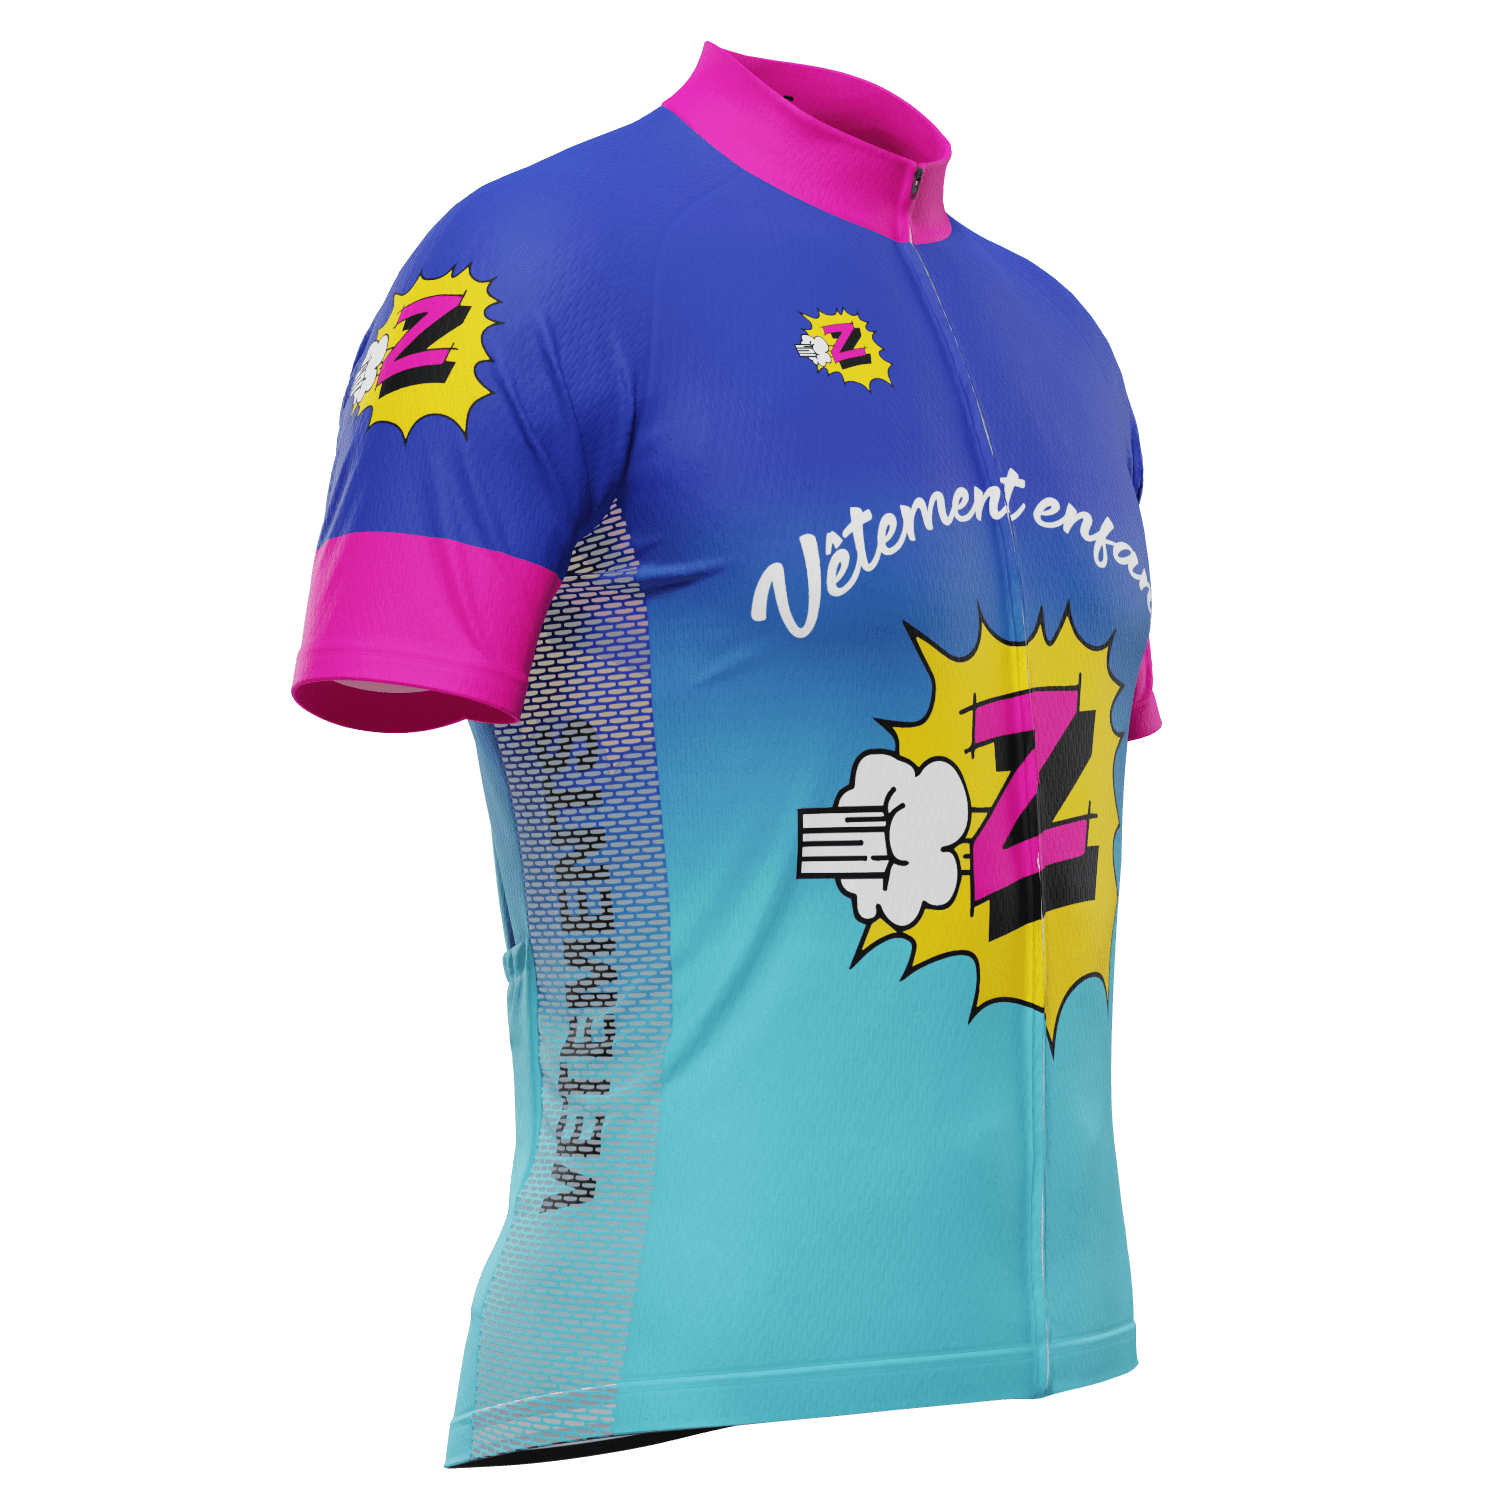 Men's Vetements Enfants Team Z Retro Short Sleeve Cycling Jersey